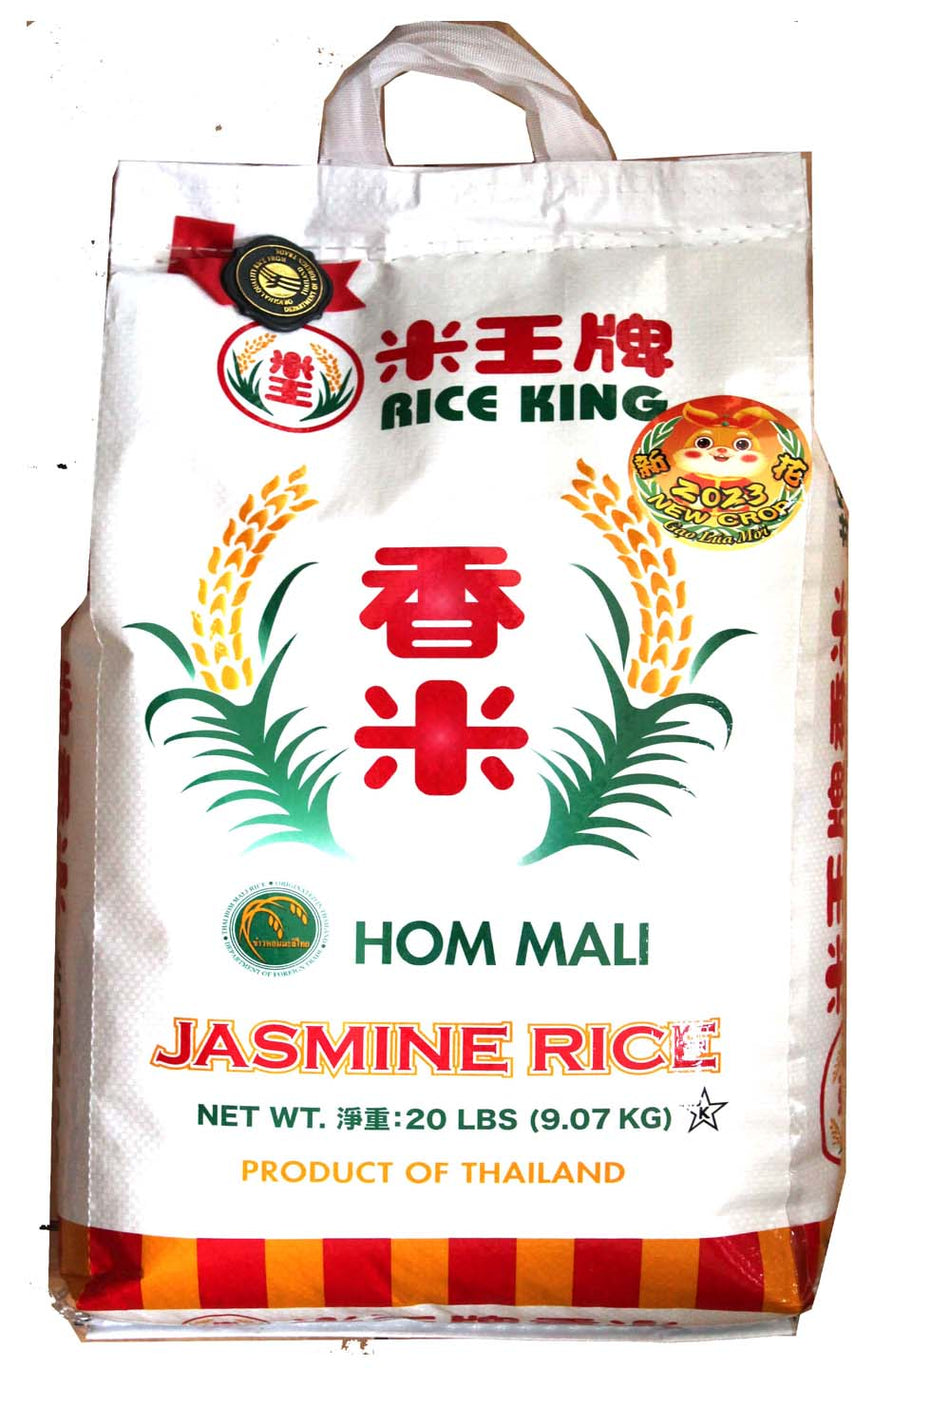 Rice King Jasmine rice